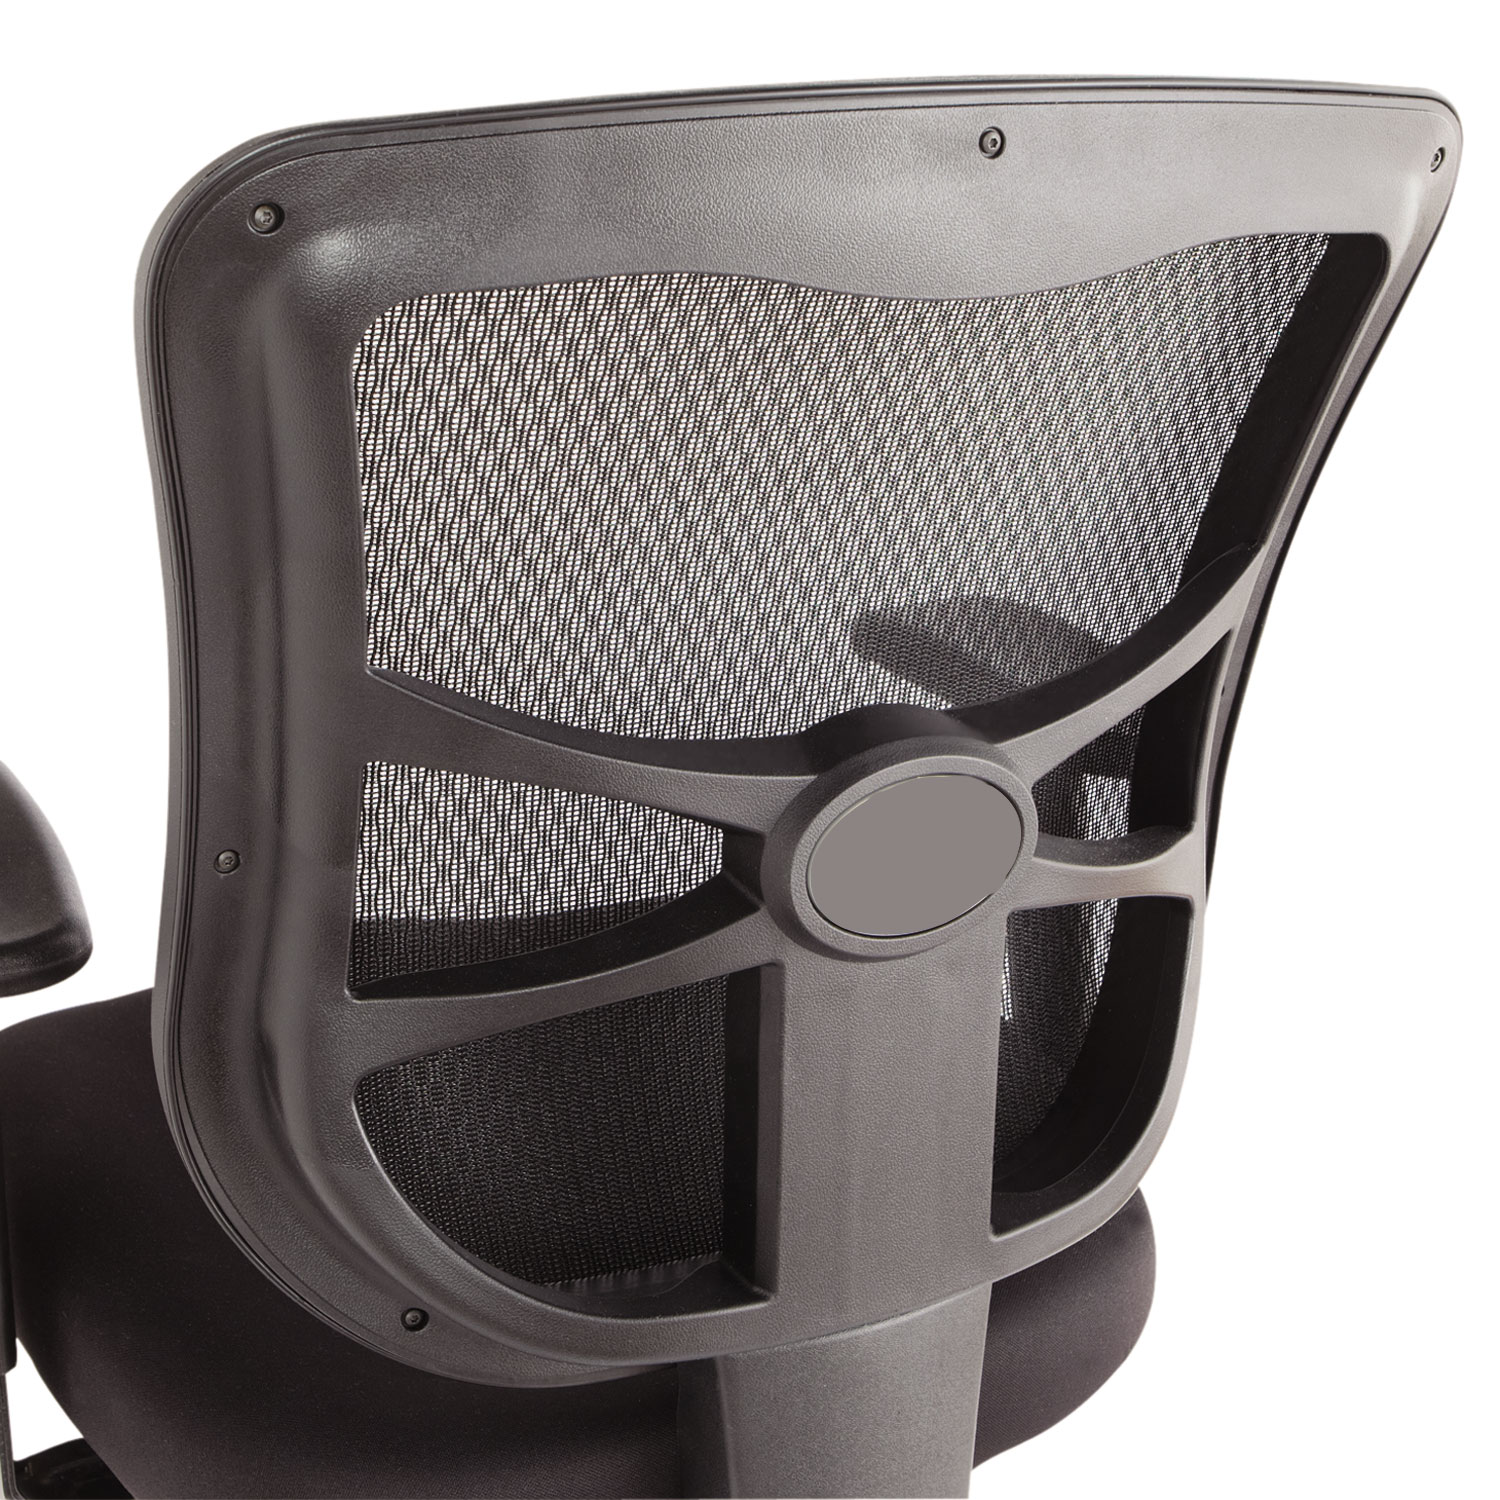 Alera Elusion Series Mesh Mid-Back Multifunction Chair, Black